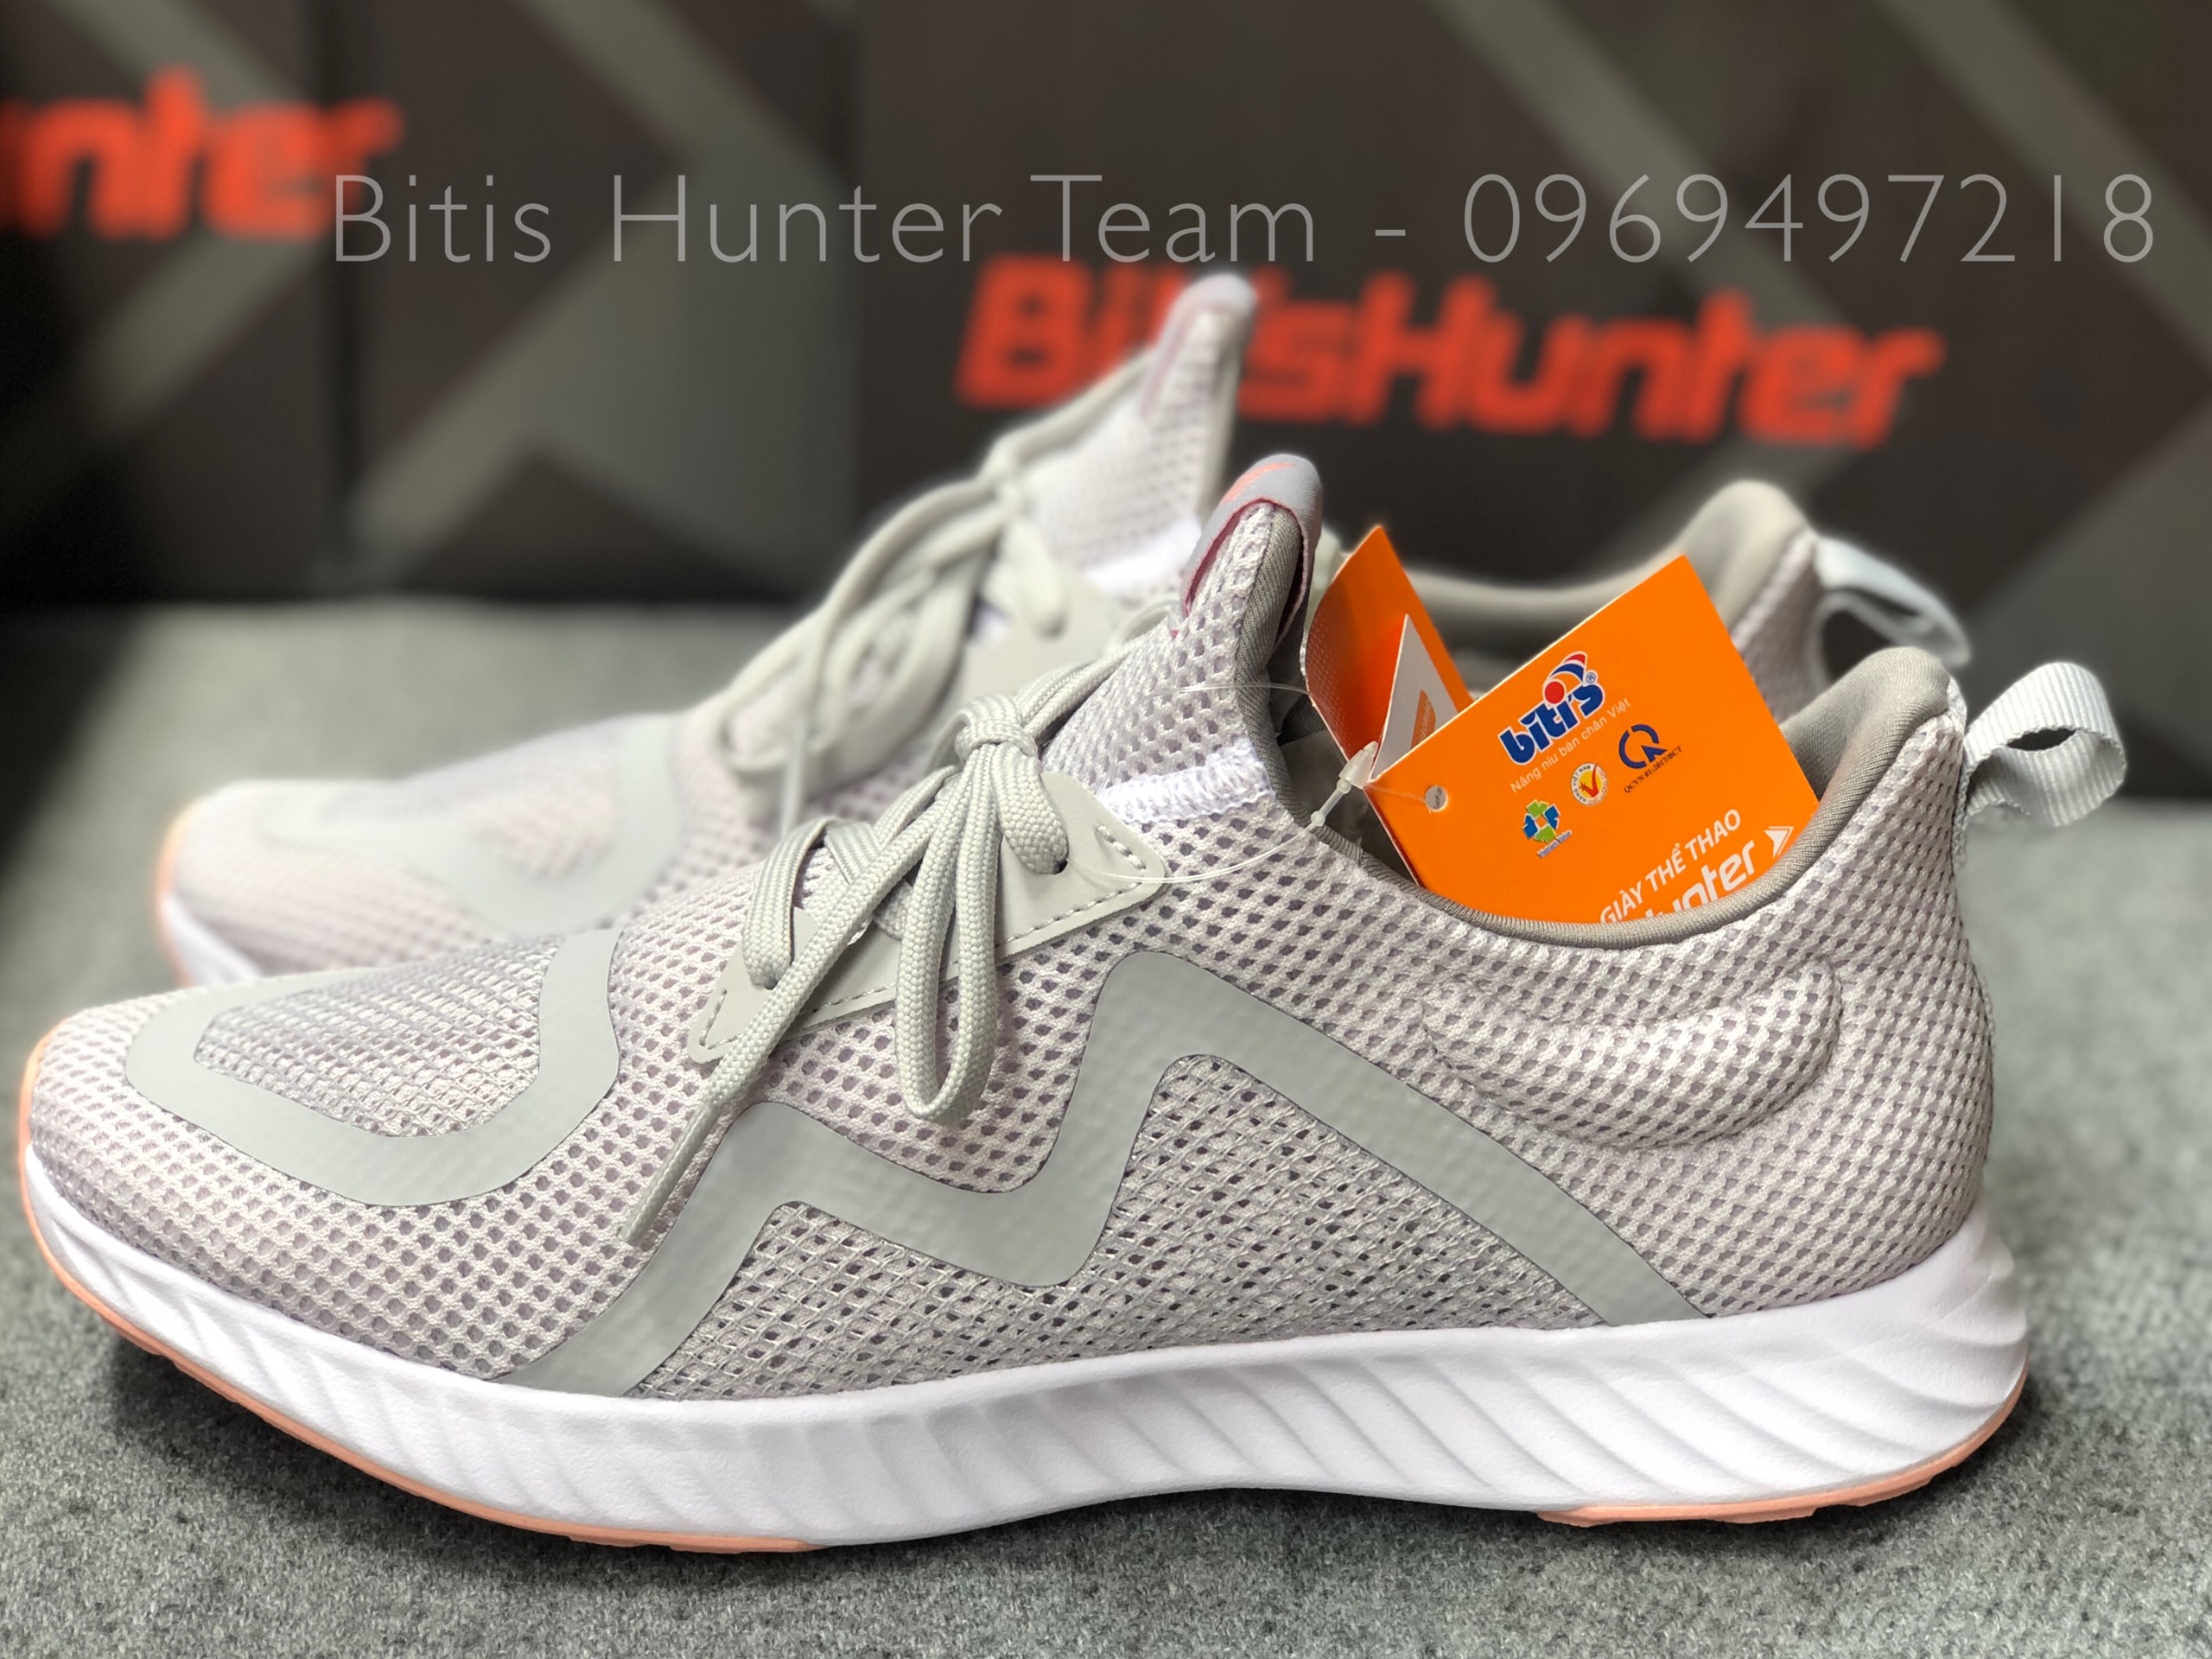 Giày Thể Thao Cao Cấp Nữ Bitis Hunter Core Jogging - DSWH05300XAM